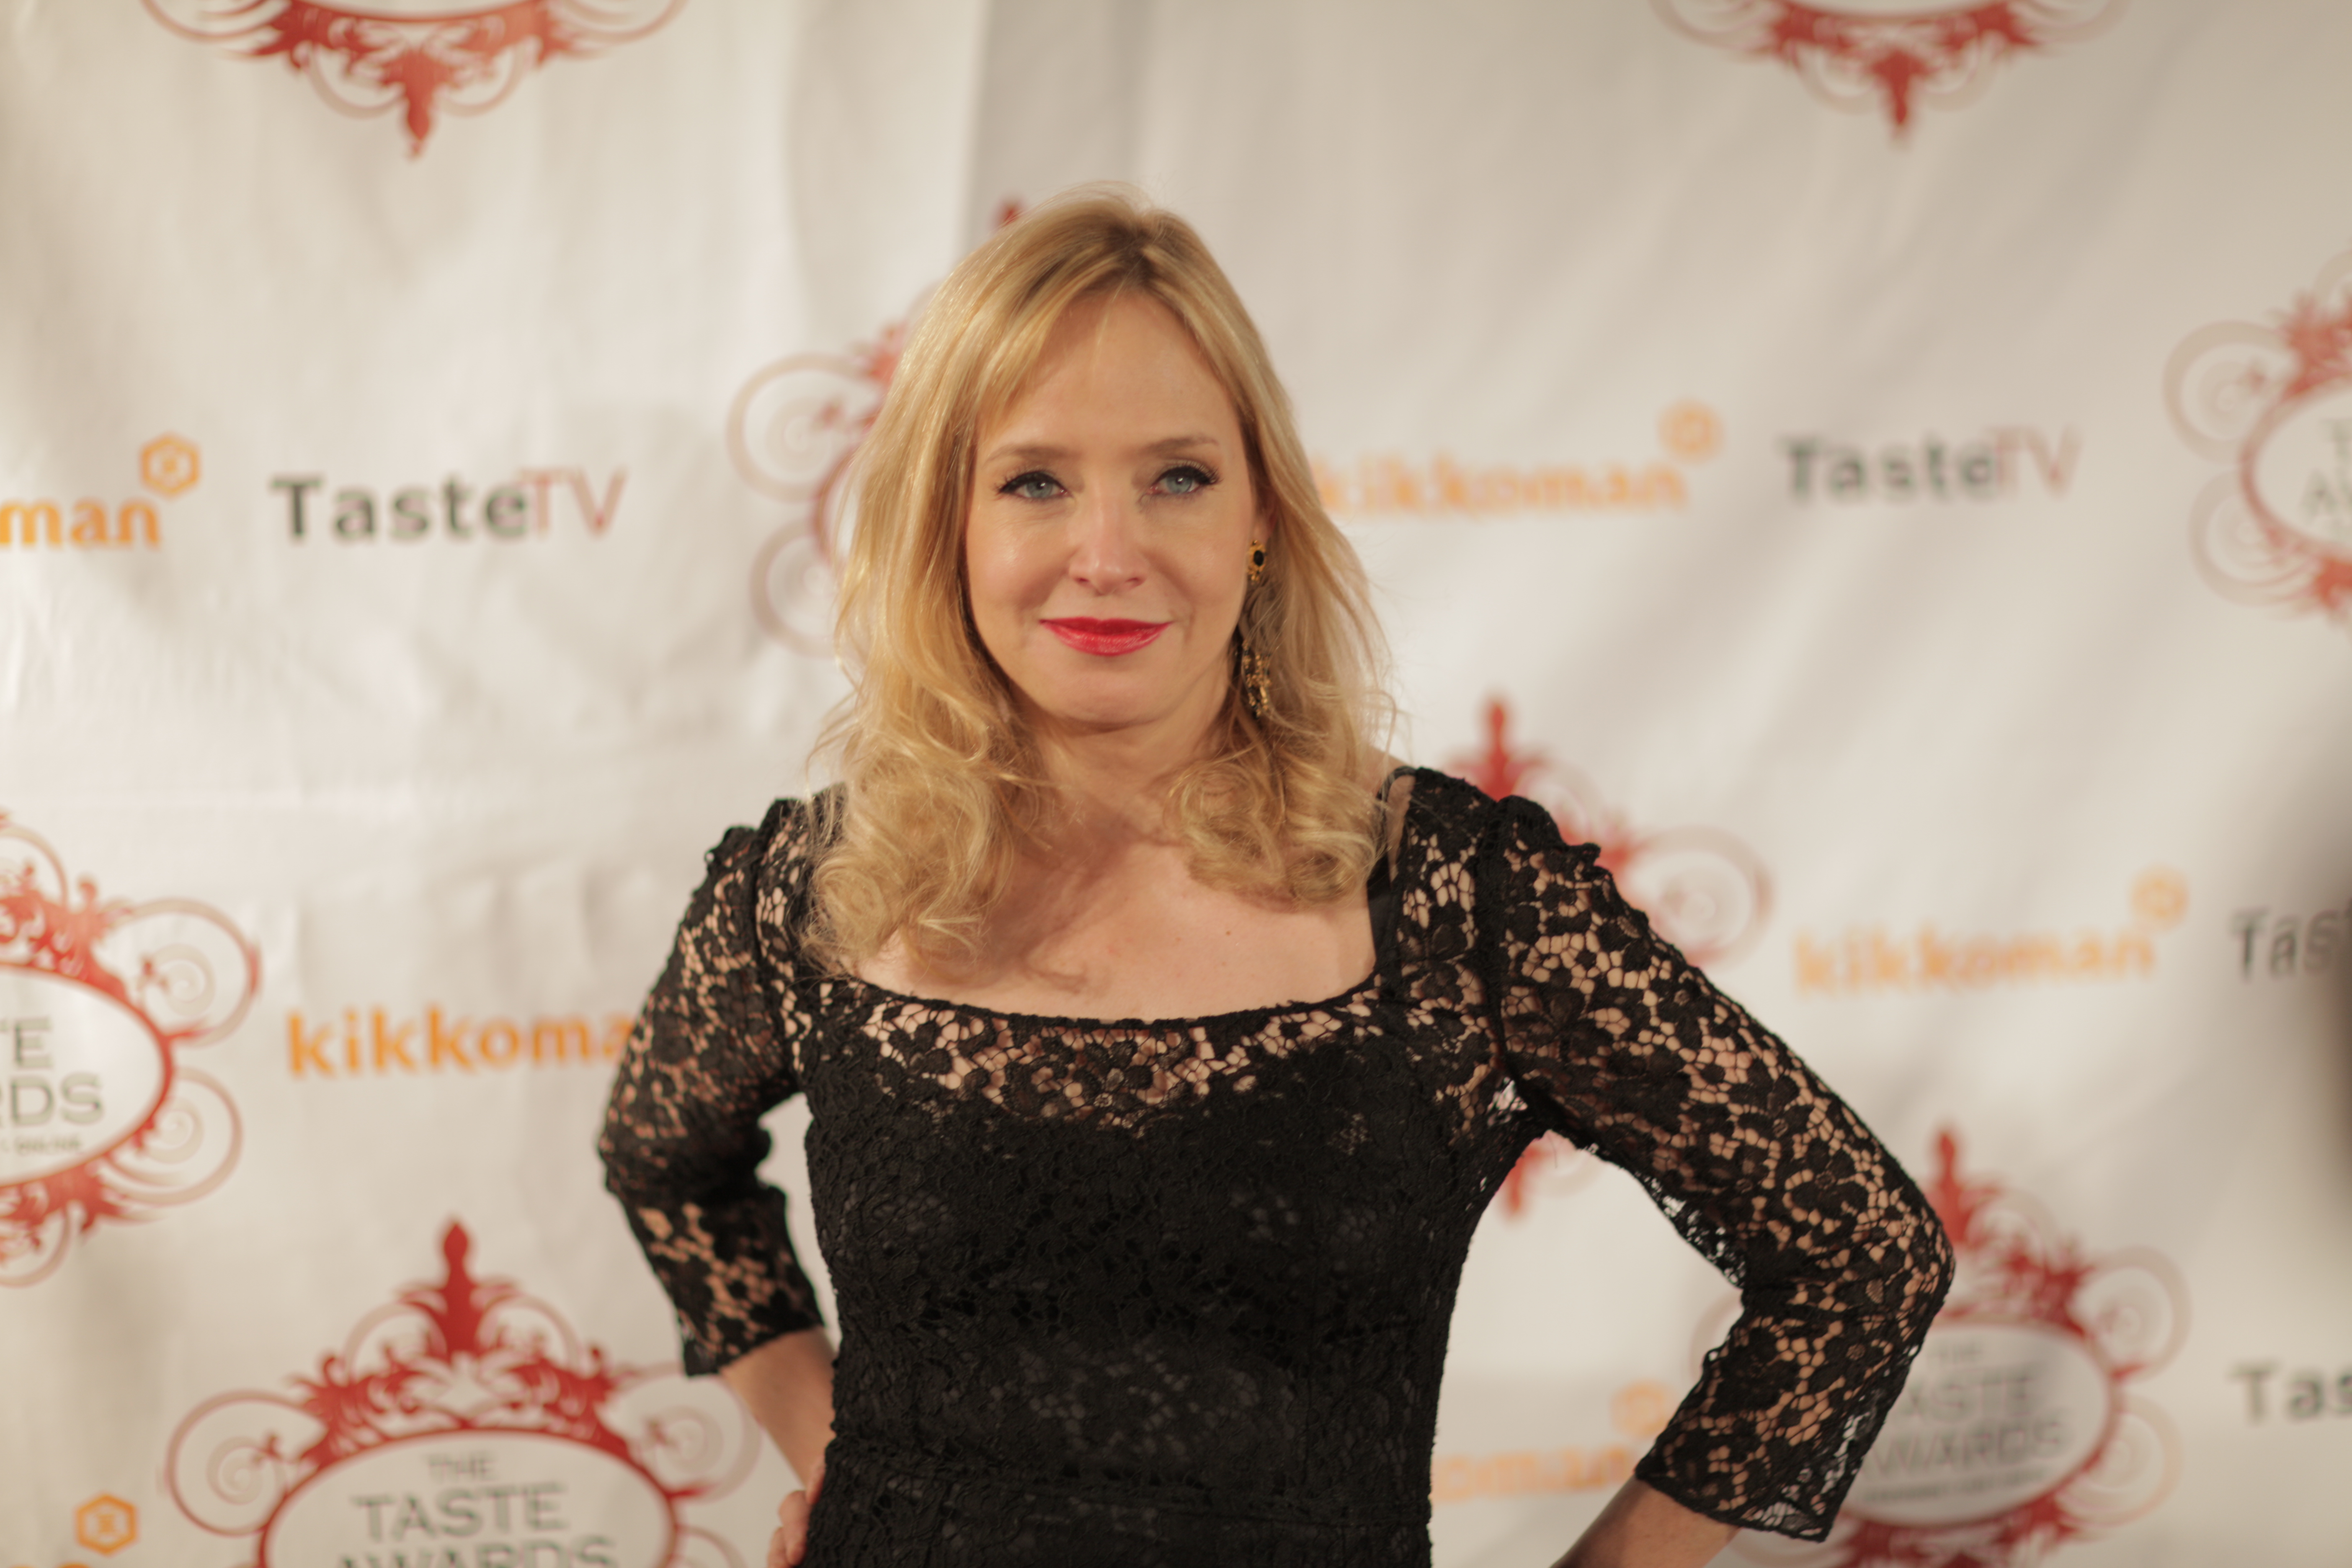 Holly Fulger at the Taste Awards